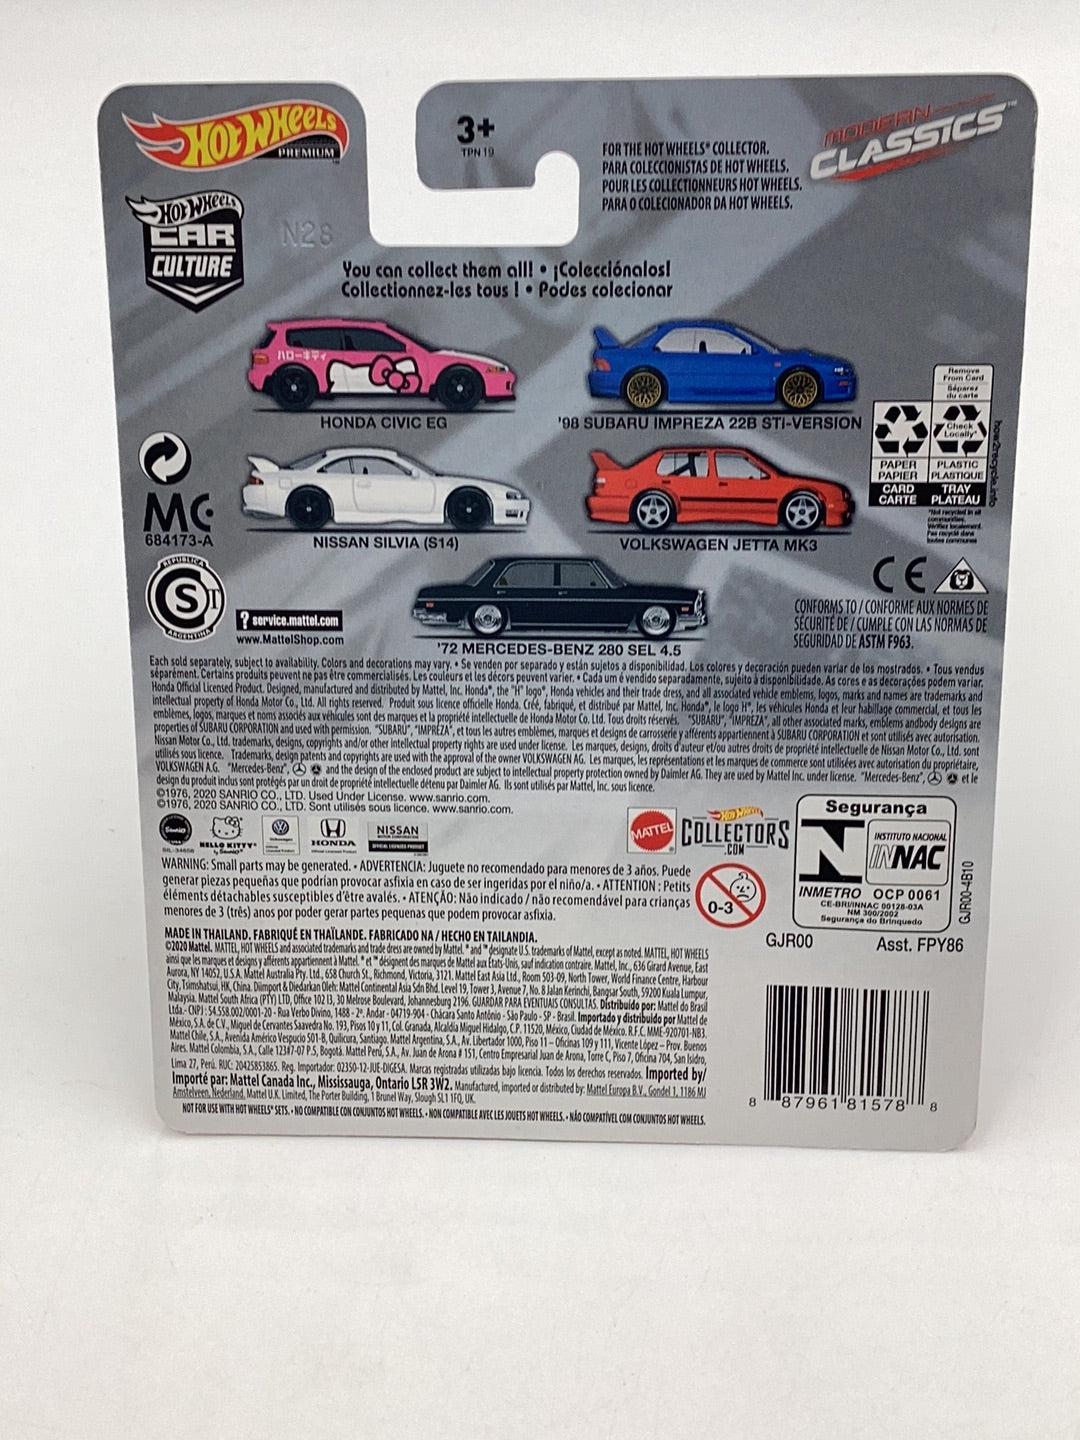 Hot wheels car culture modern classics 1/5 Honda Civic EG Hello Kitty #1 with protector